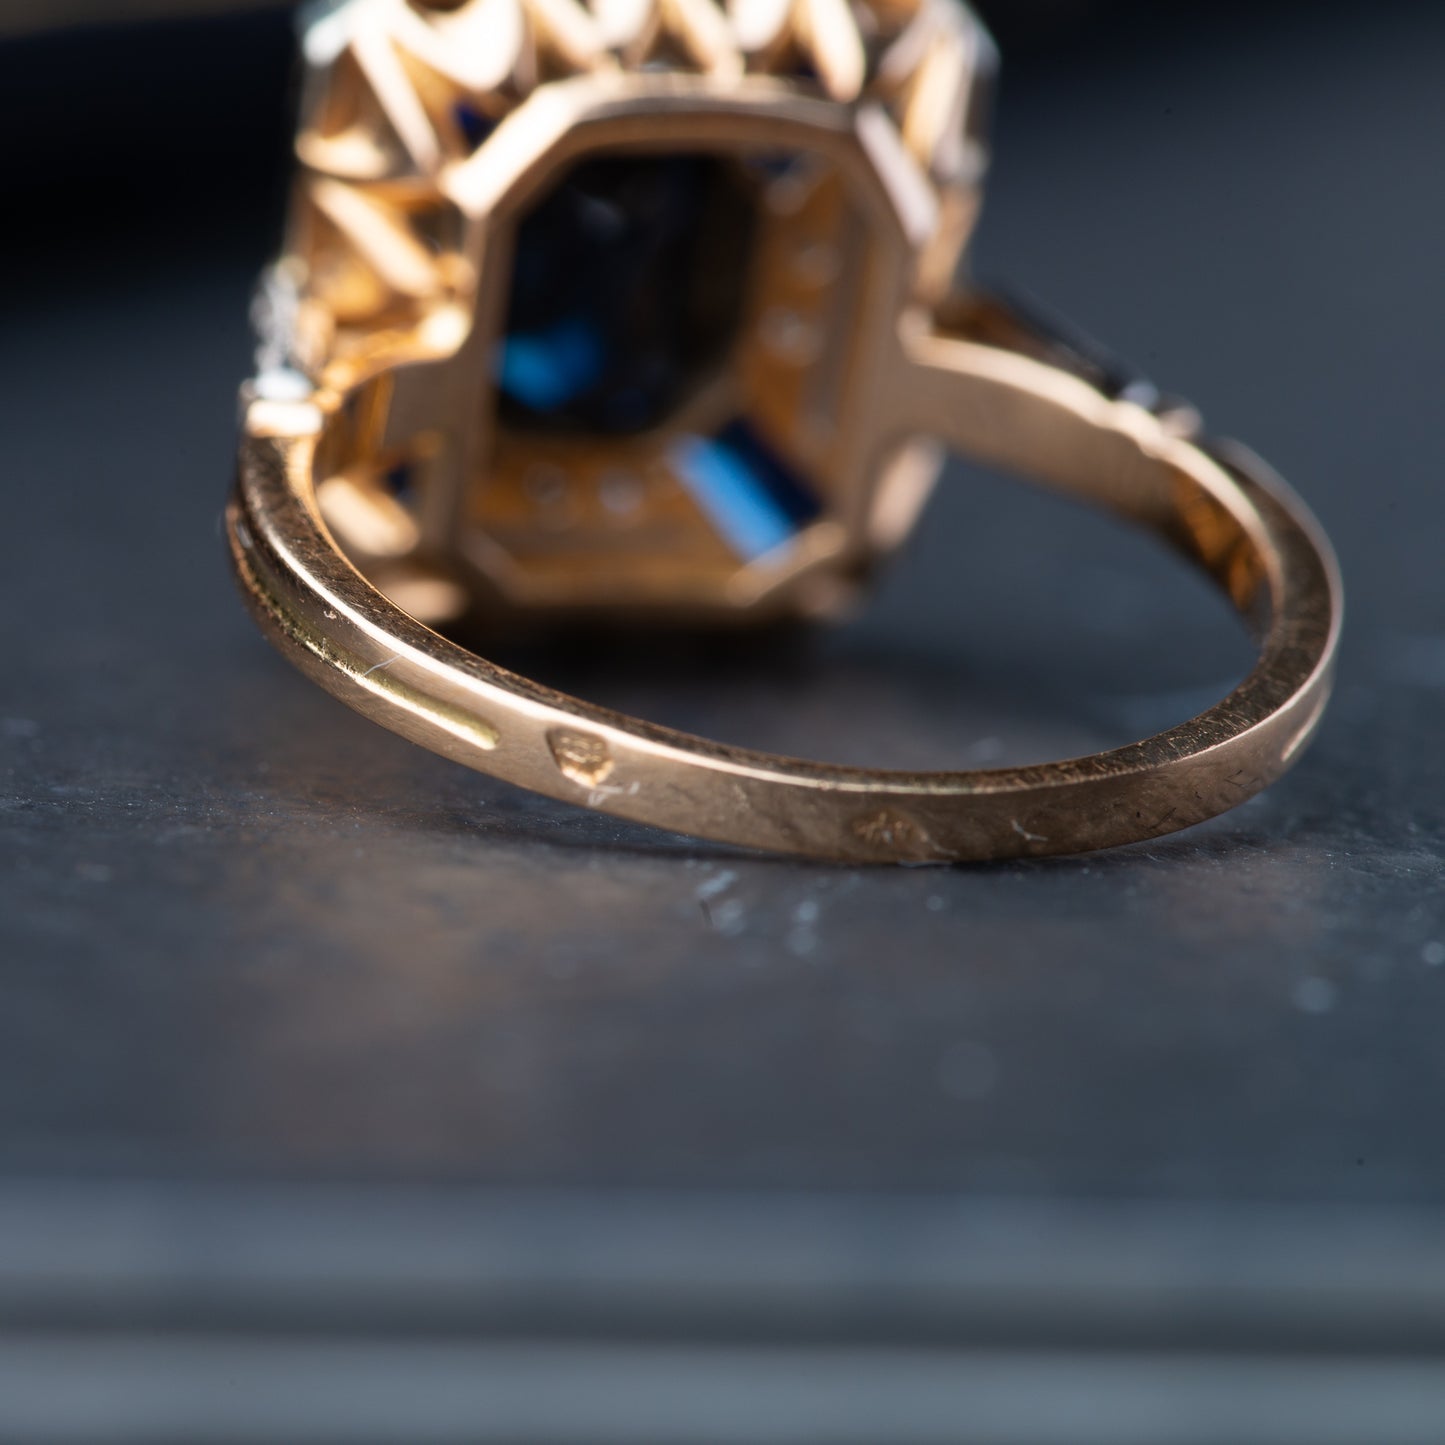 Vintage 18K Gold Sapphire Diamond Ring